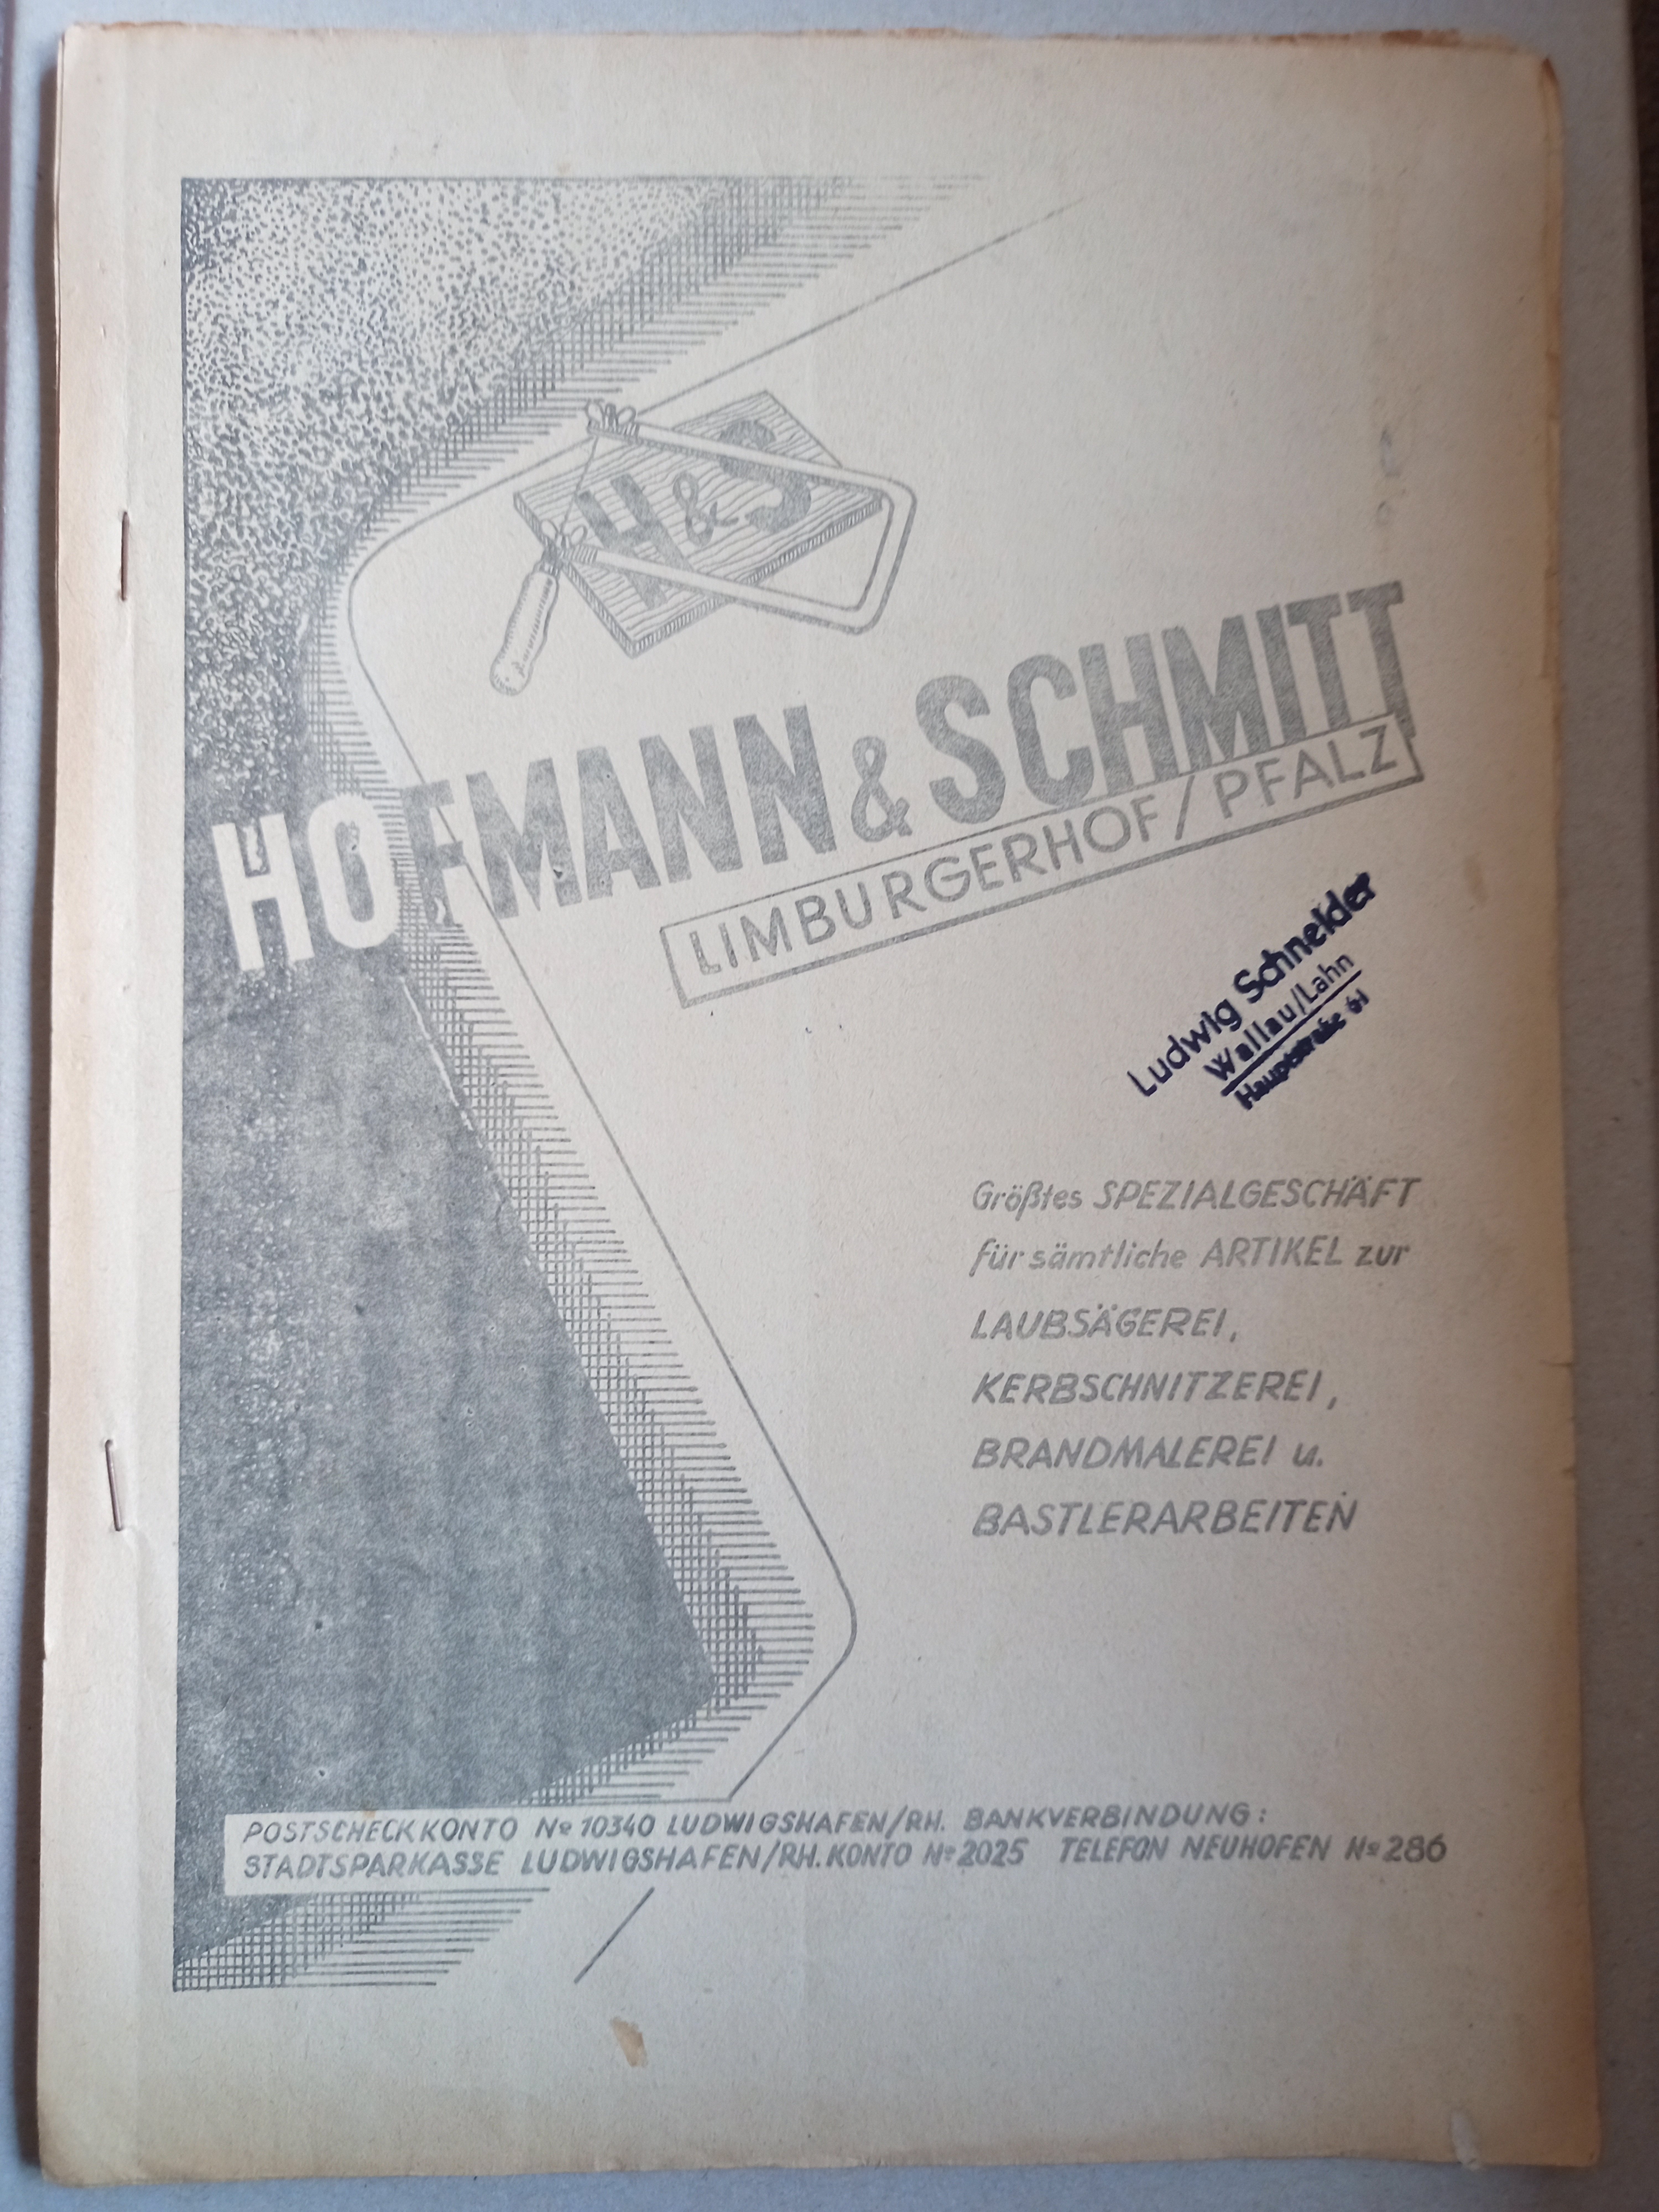 Hofmann + Schmidt (Deutsches Segelflugmuseum mit Modellflug CC BY-NC-SA)